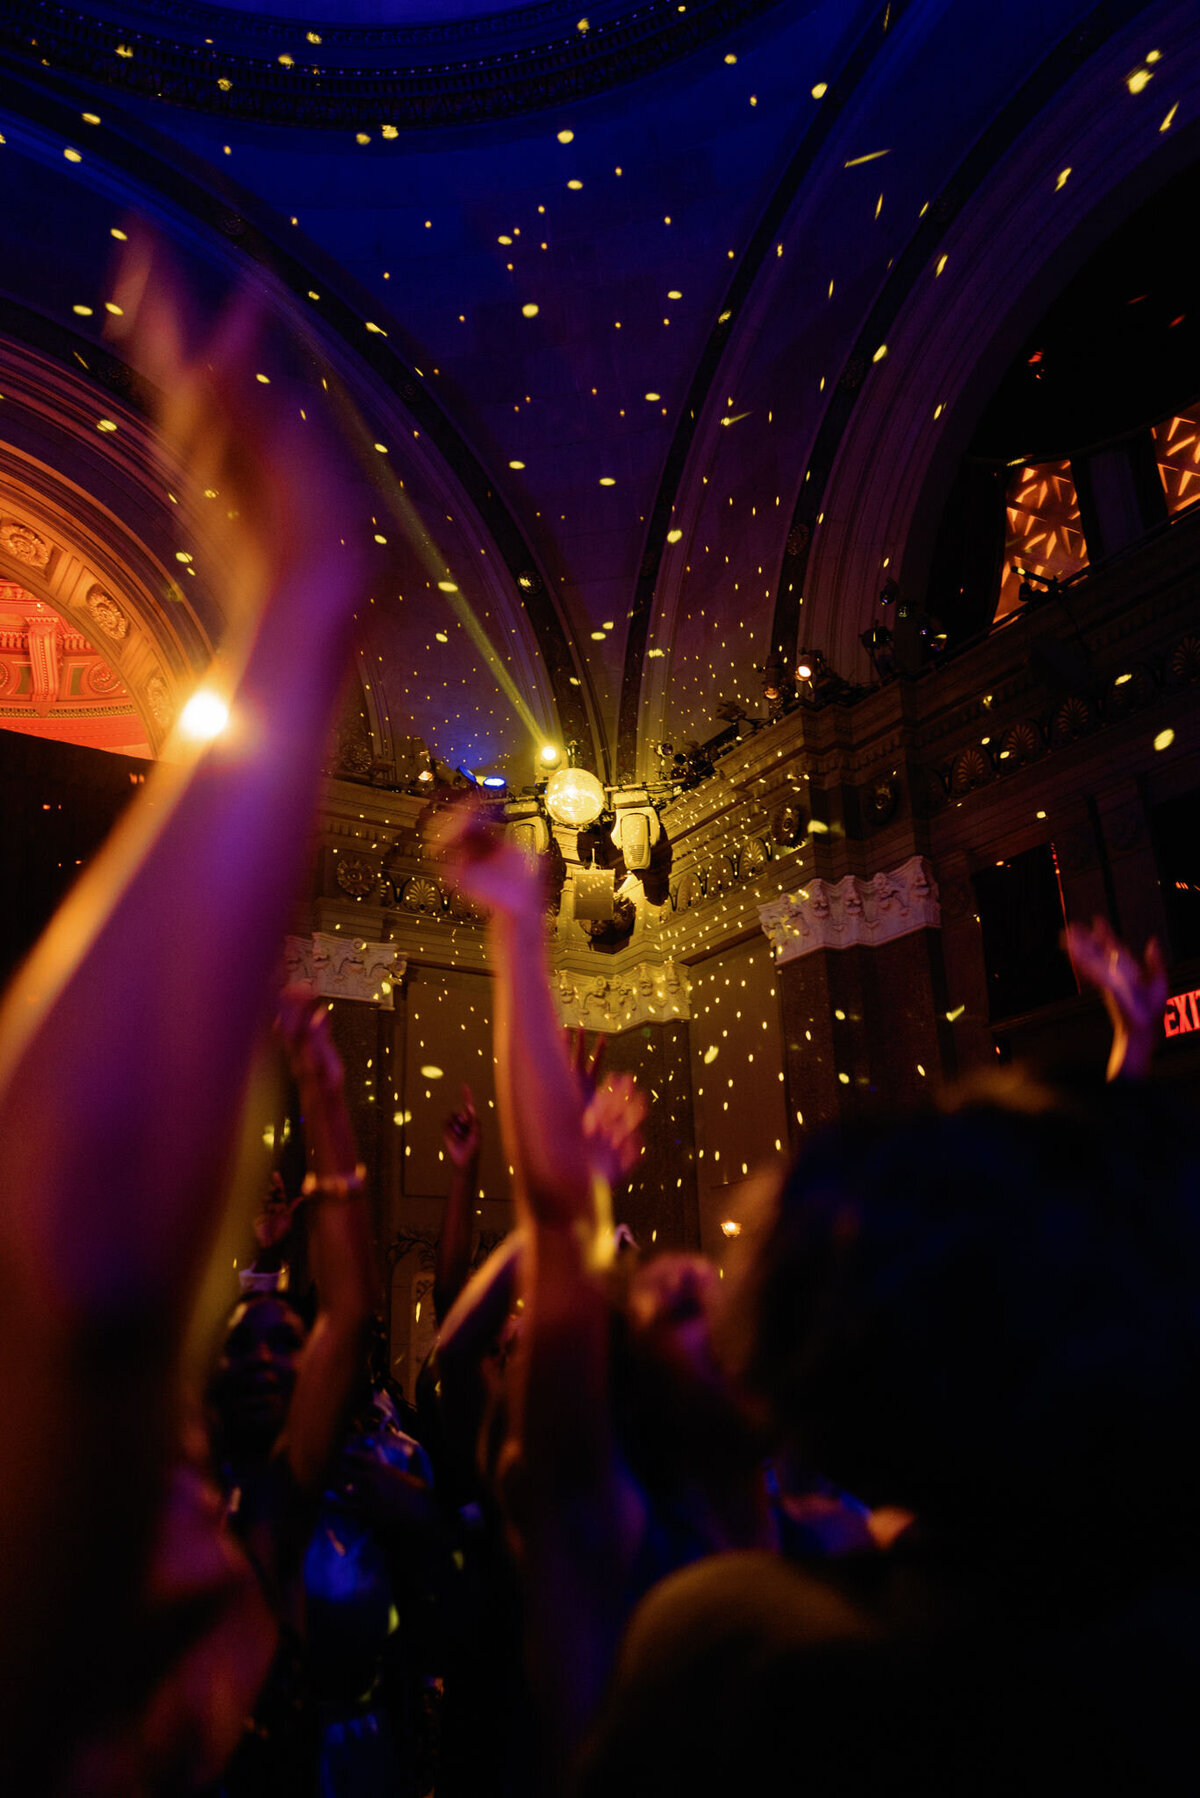 mirrorball disco ball wedding lighting at historic new york wedding venue